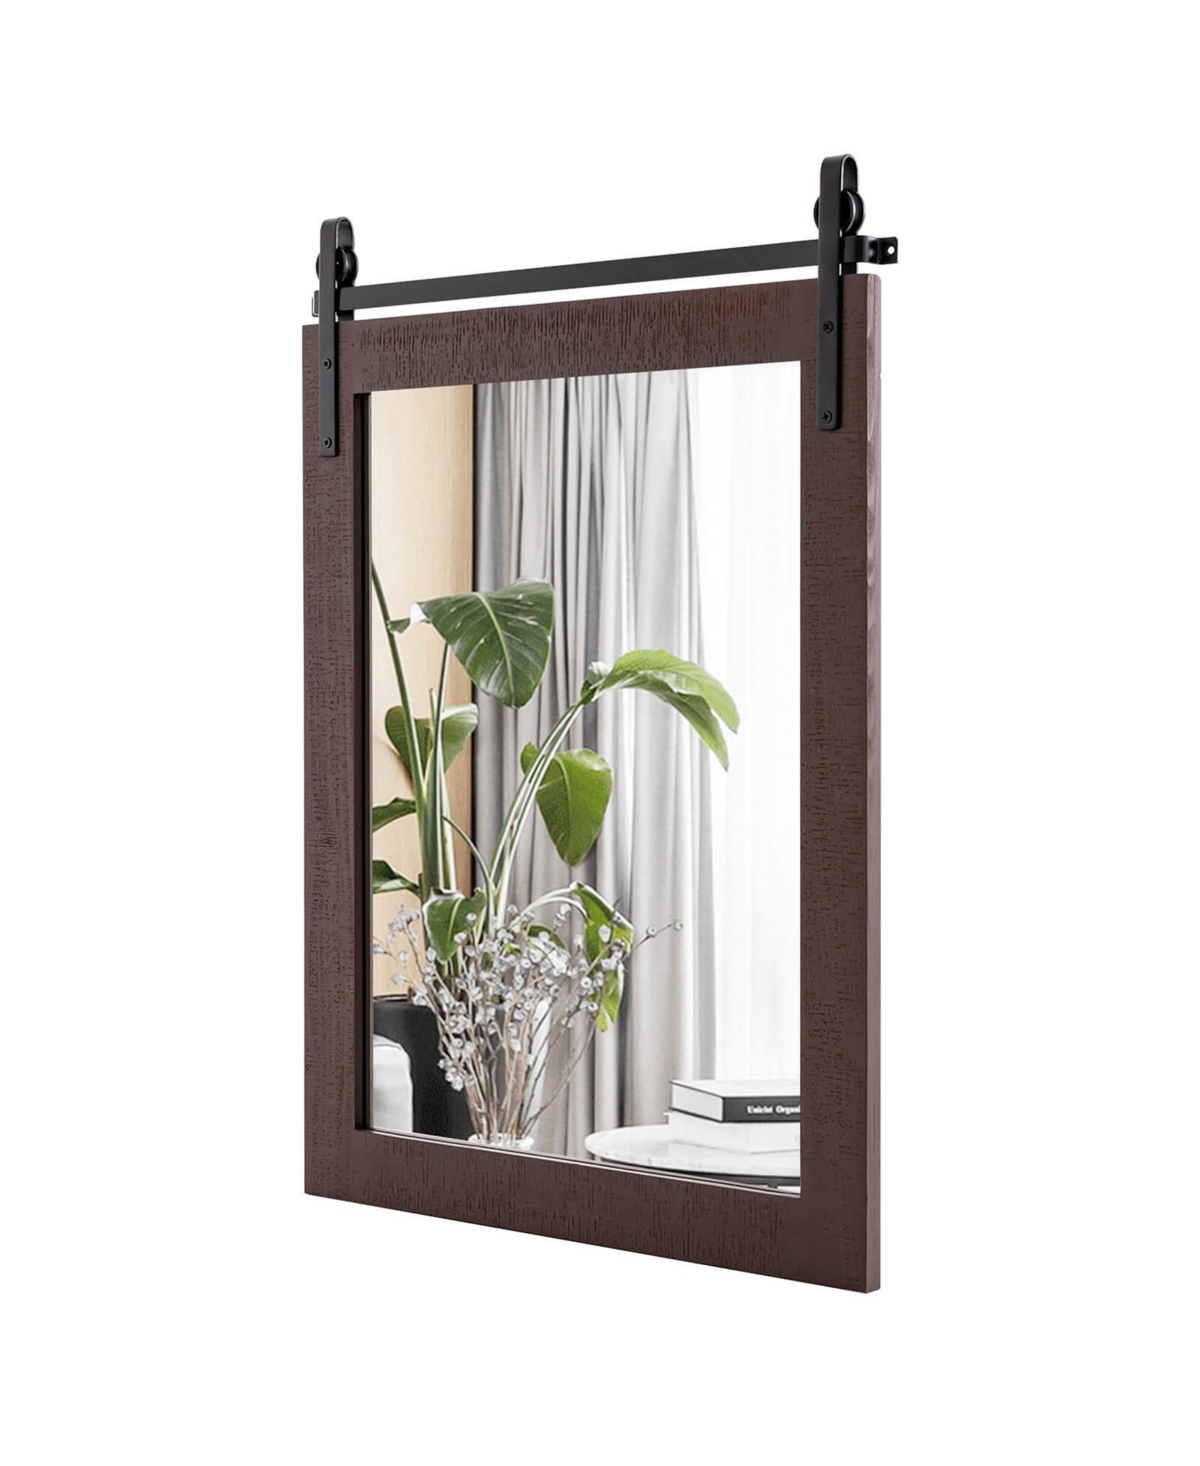 30''x22'' Wall Mount Mirror Decor Vanity Mirror Wood Frame Barn Door Style - Brown